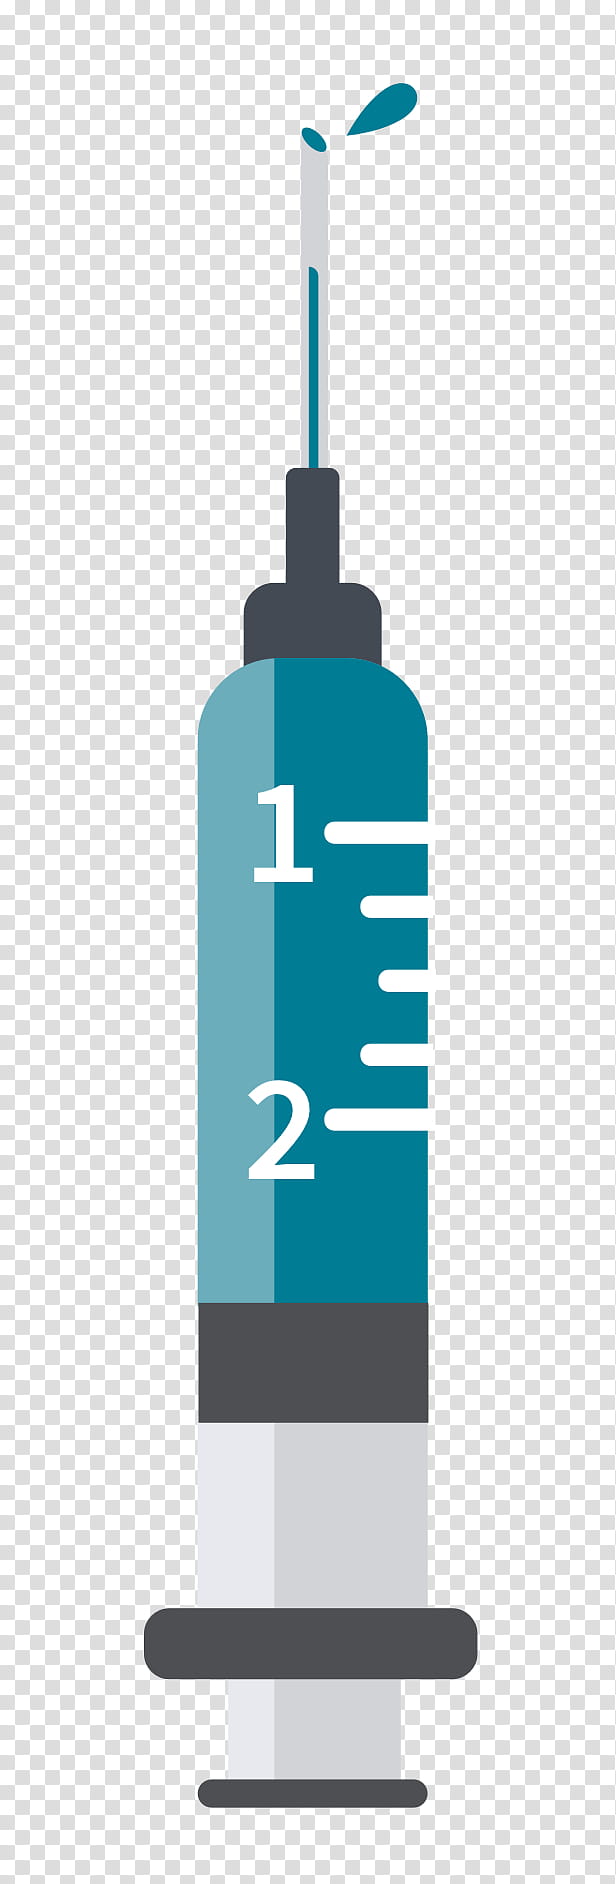 Plastic Bottle, Vaccine, Influenza, Influenza Vaccine, Health, Public Health, Text, Medicine transparent background PNG clipart